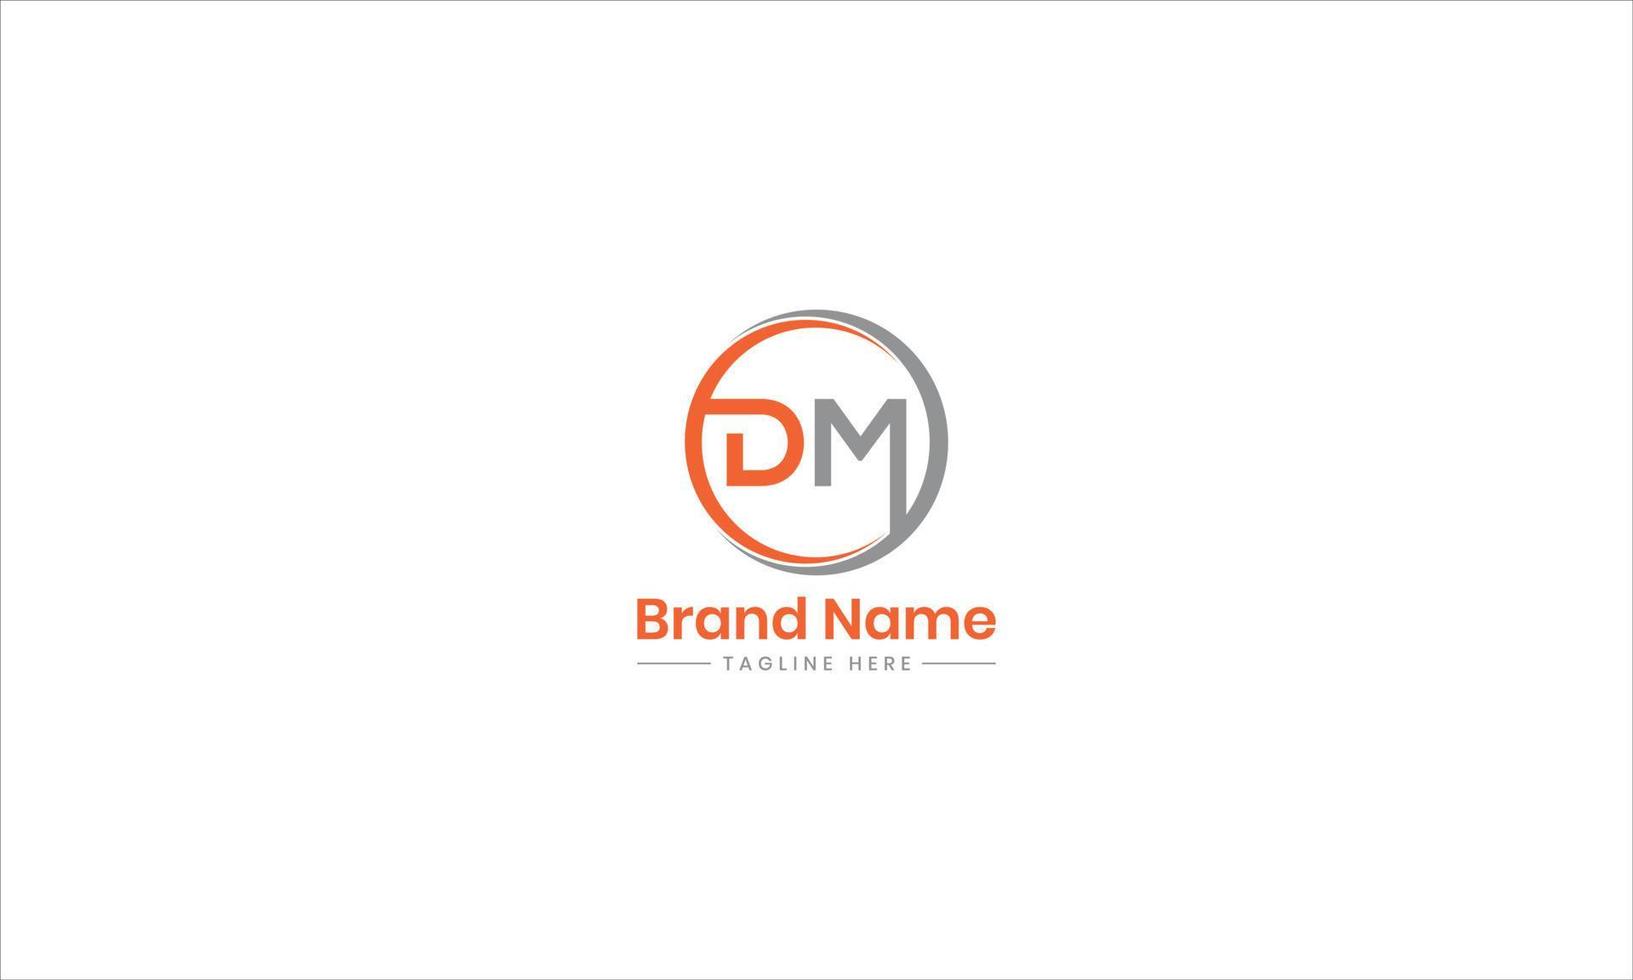 DM logo, Letter DM, DM letter logo design vector with orange and gray colors. MD Letter Logo Design. Initial letters MD logo icon. Abstract letter MD logotype logo design template. MD logo Pro Vector